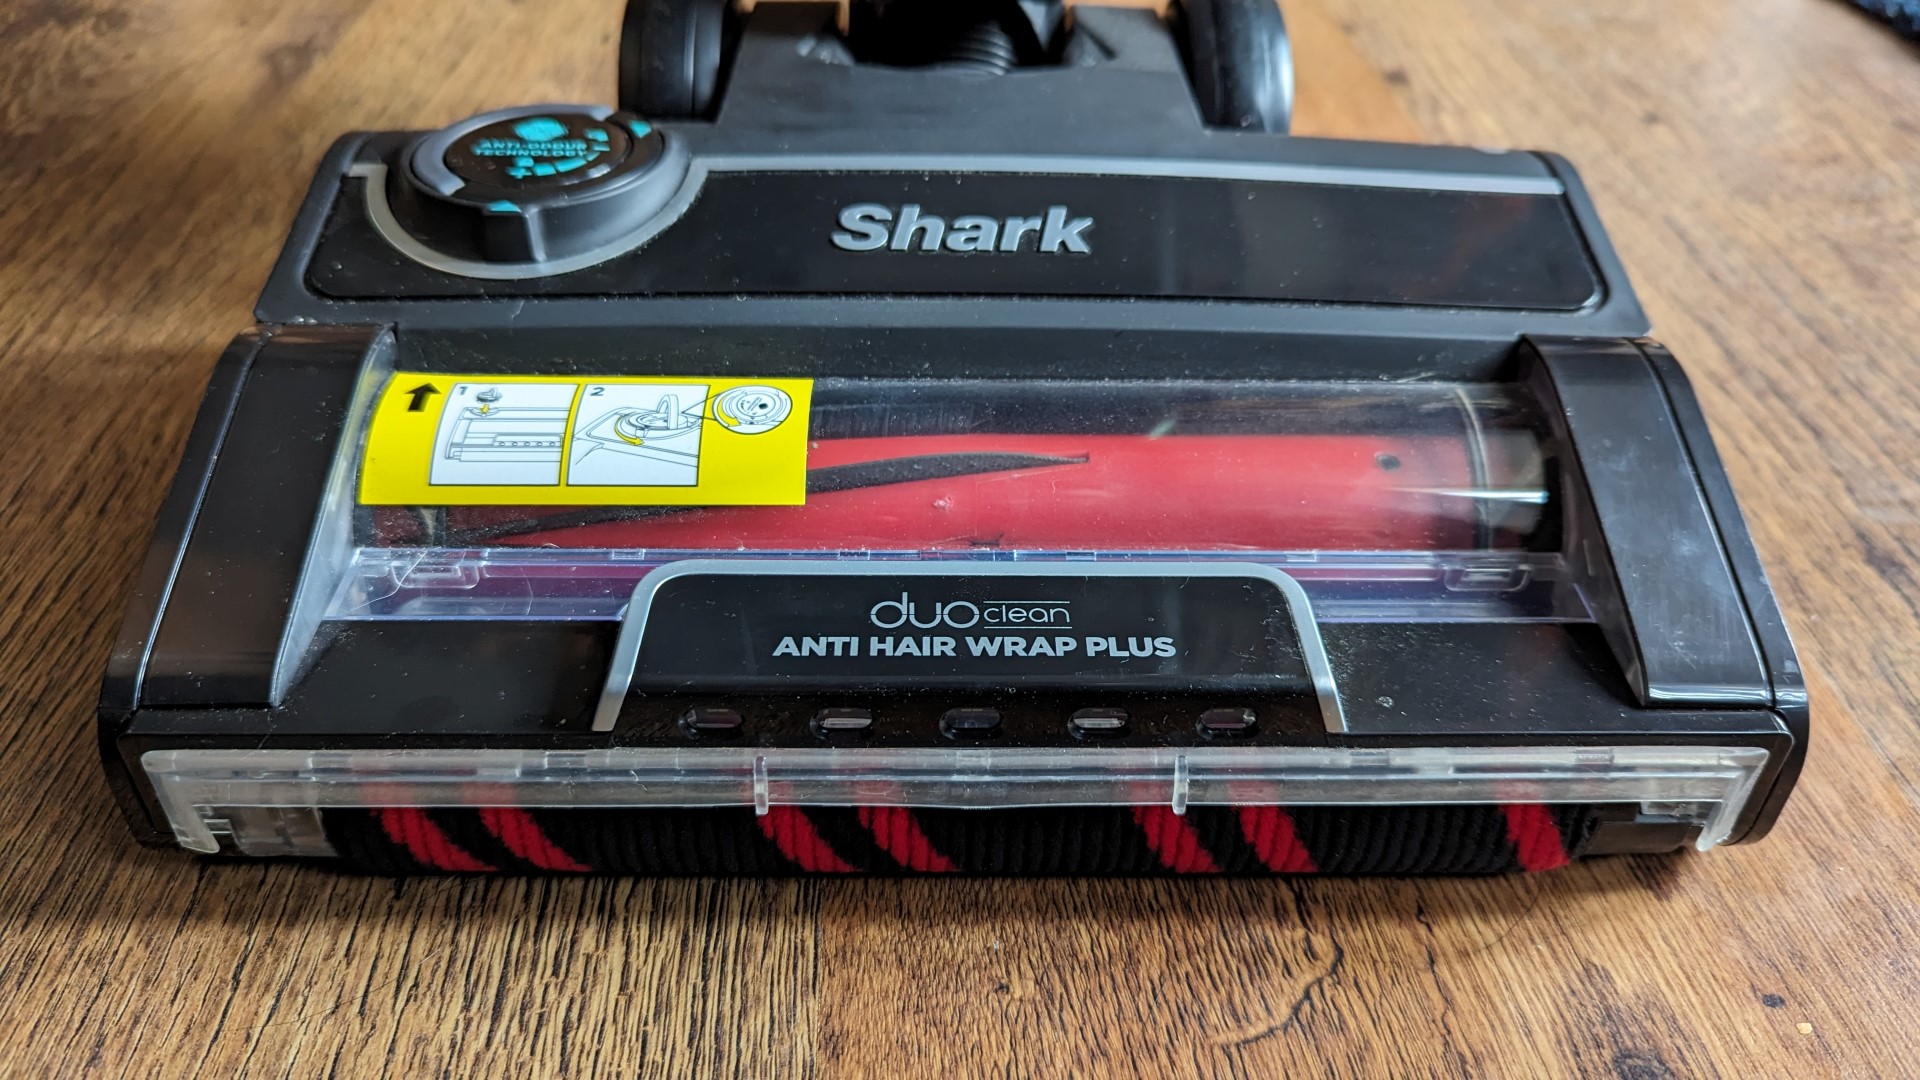  Shark Stratos Pet Pro Upright - Best corded vacuum